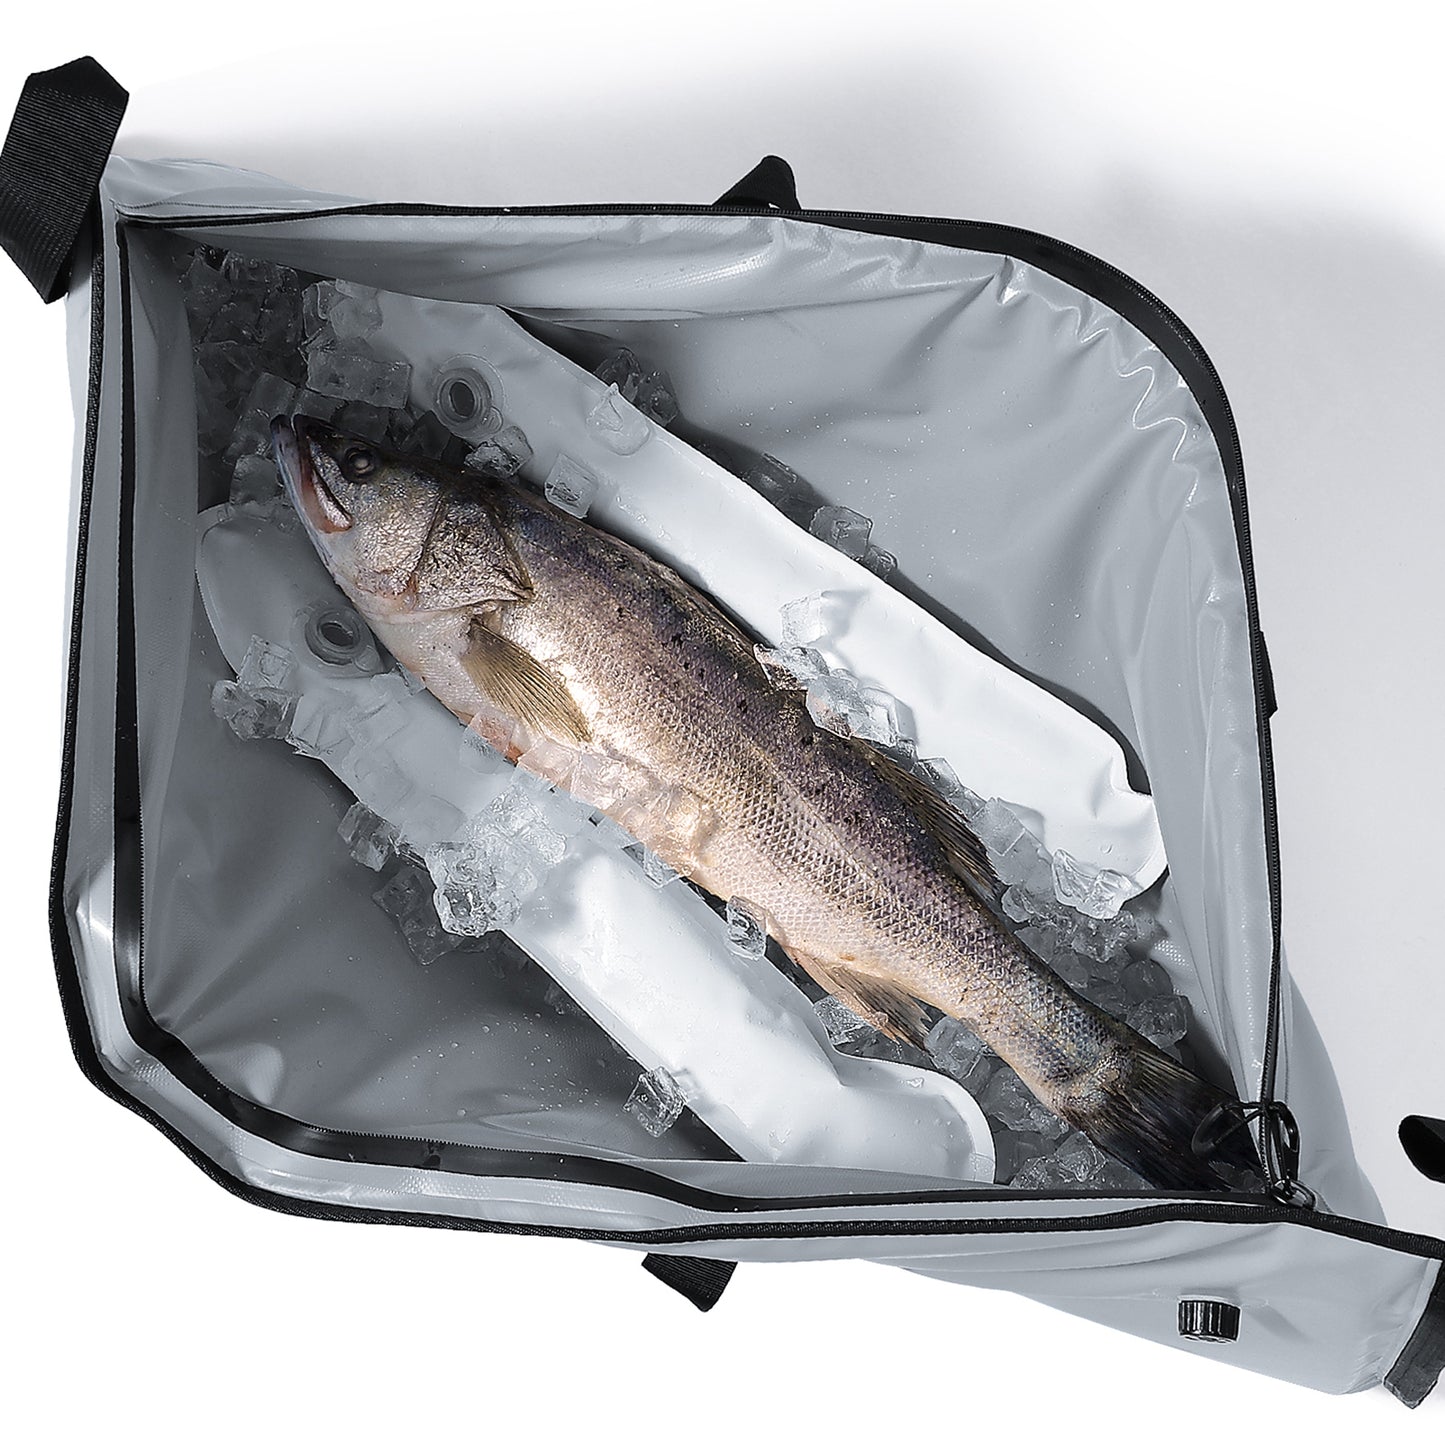 48x18'' Leakproof Fish Cooler Bag with Waterproof Zipper - Buffalo Gear 